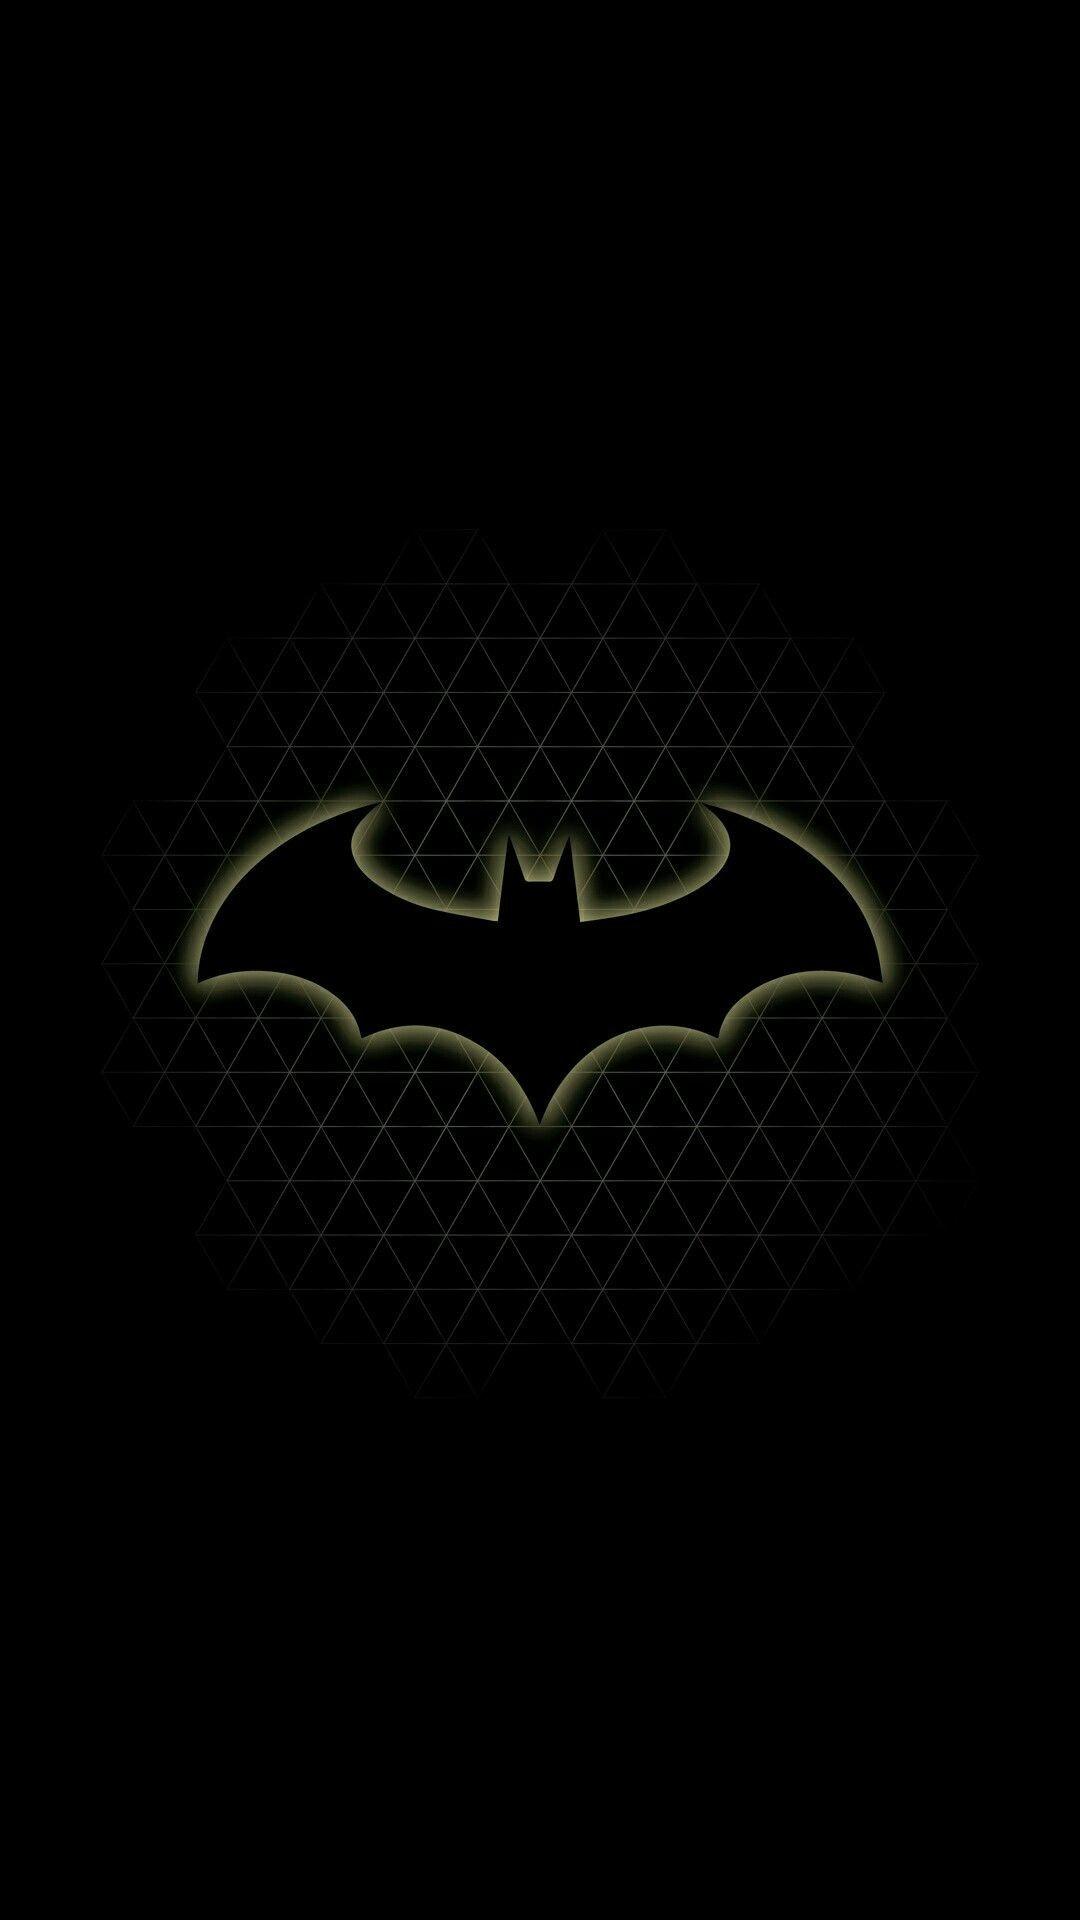 Batman Logo 4k iPhone Wallpapers - Wallpaper Cave